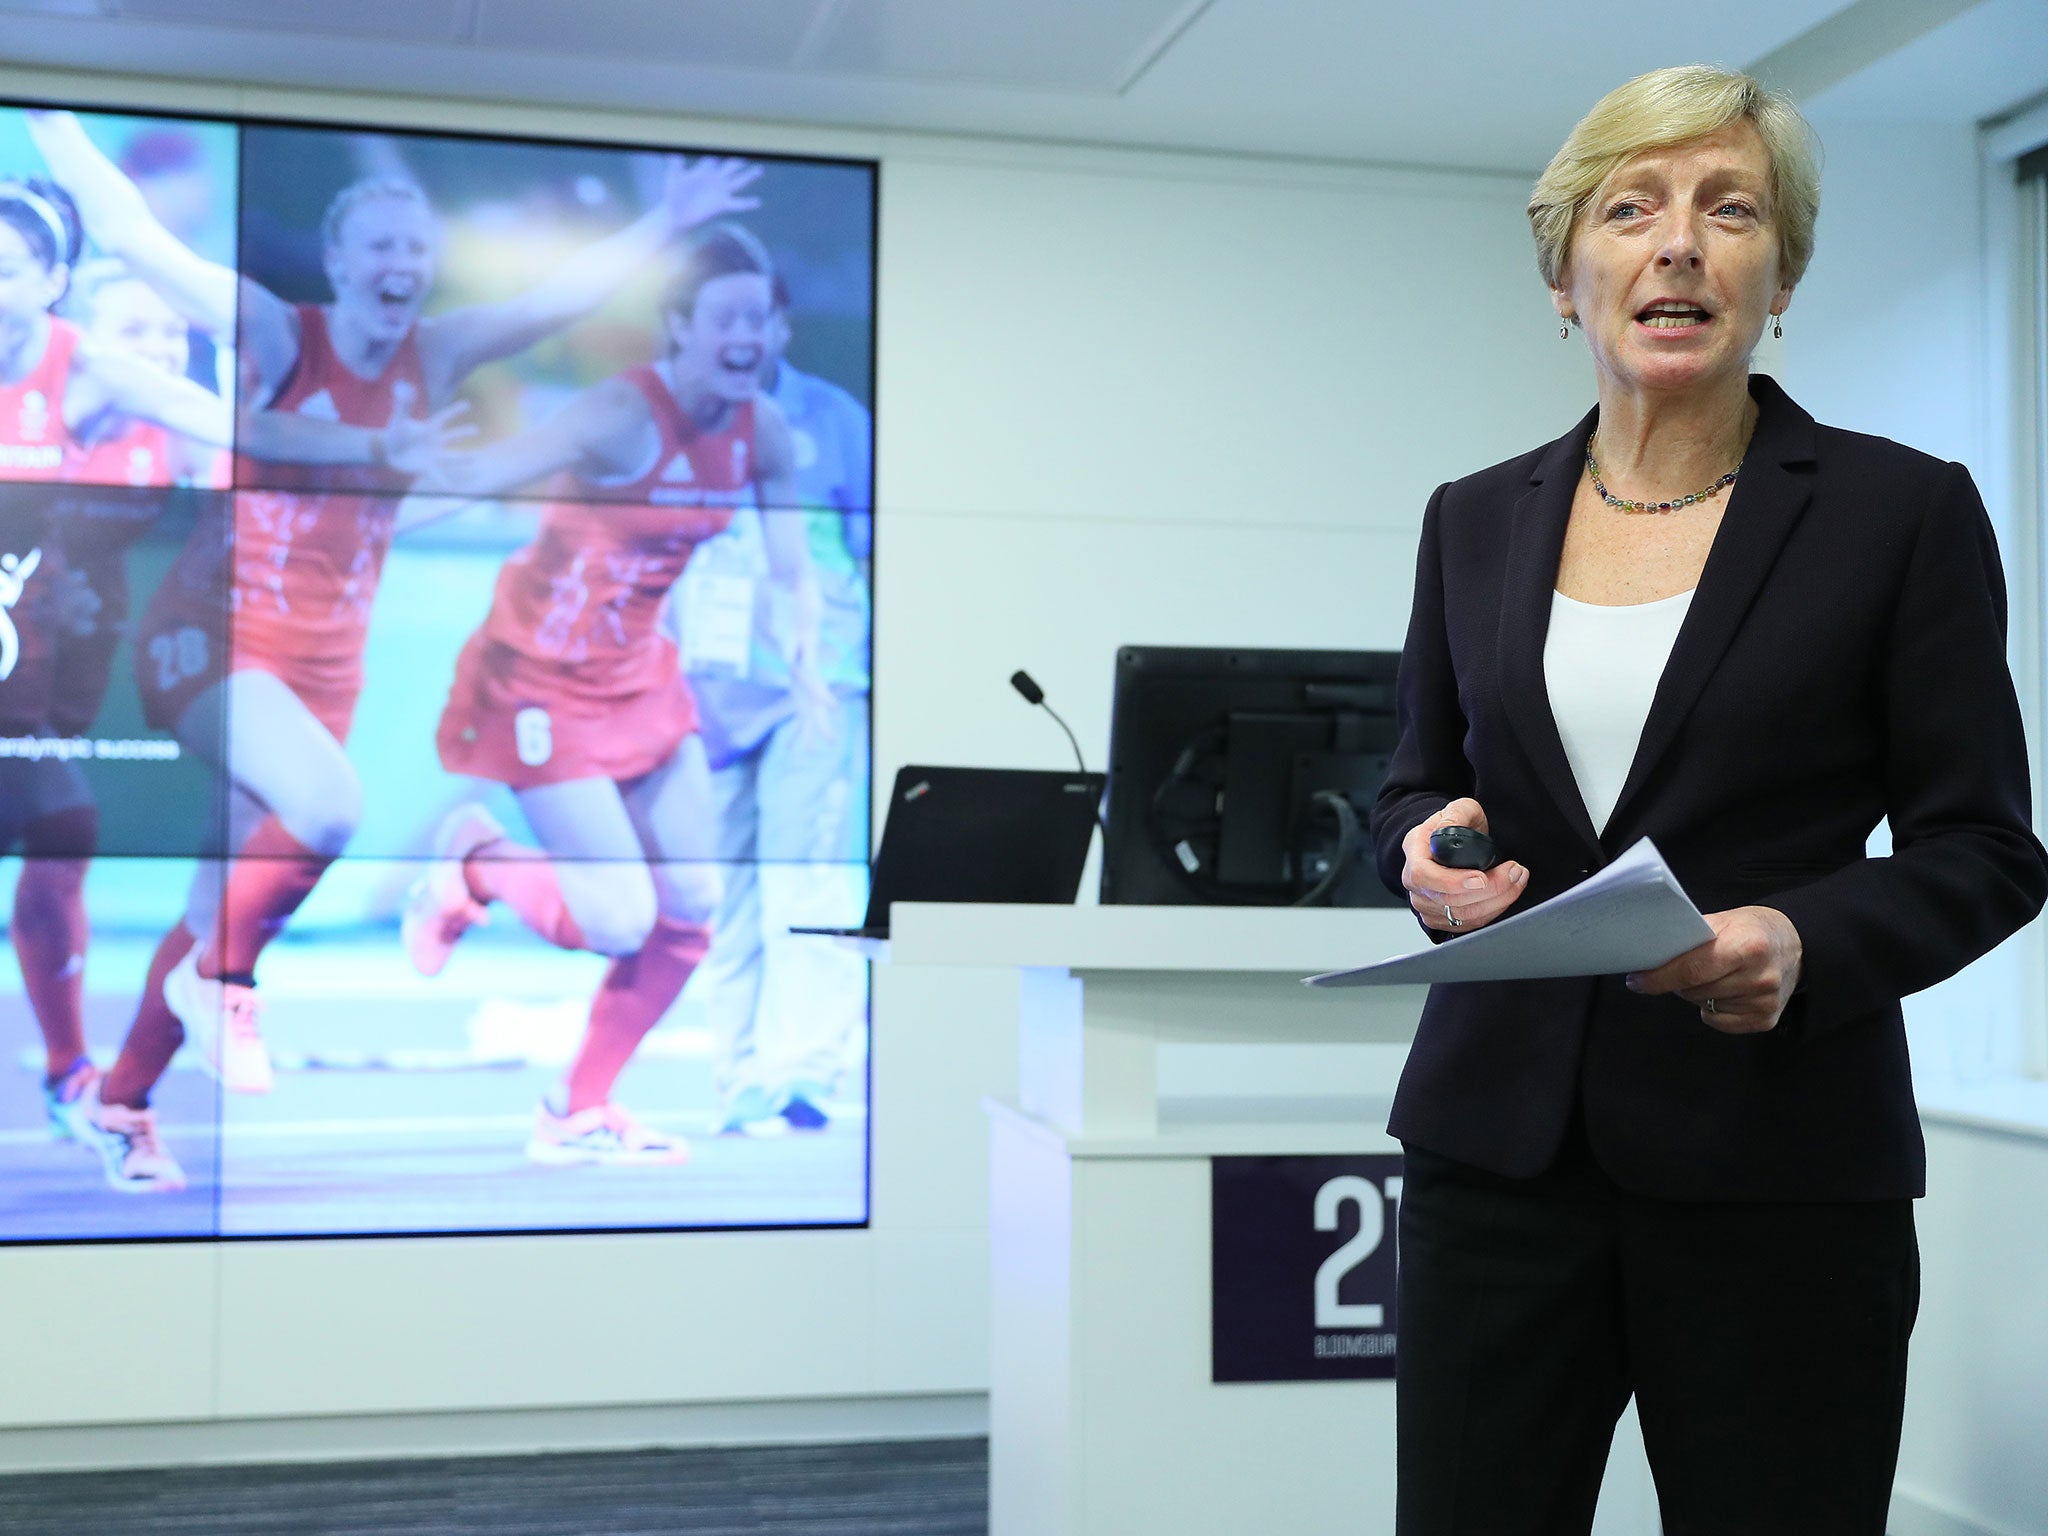 &#13;
Nicholl has expressed her concerns on behalf of UK Sport &#13;